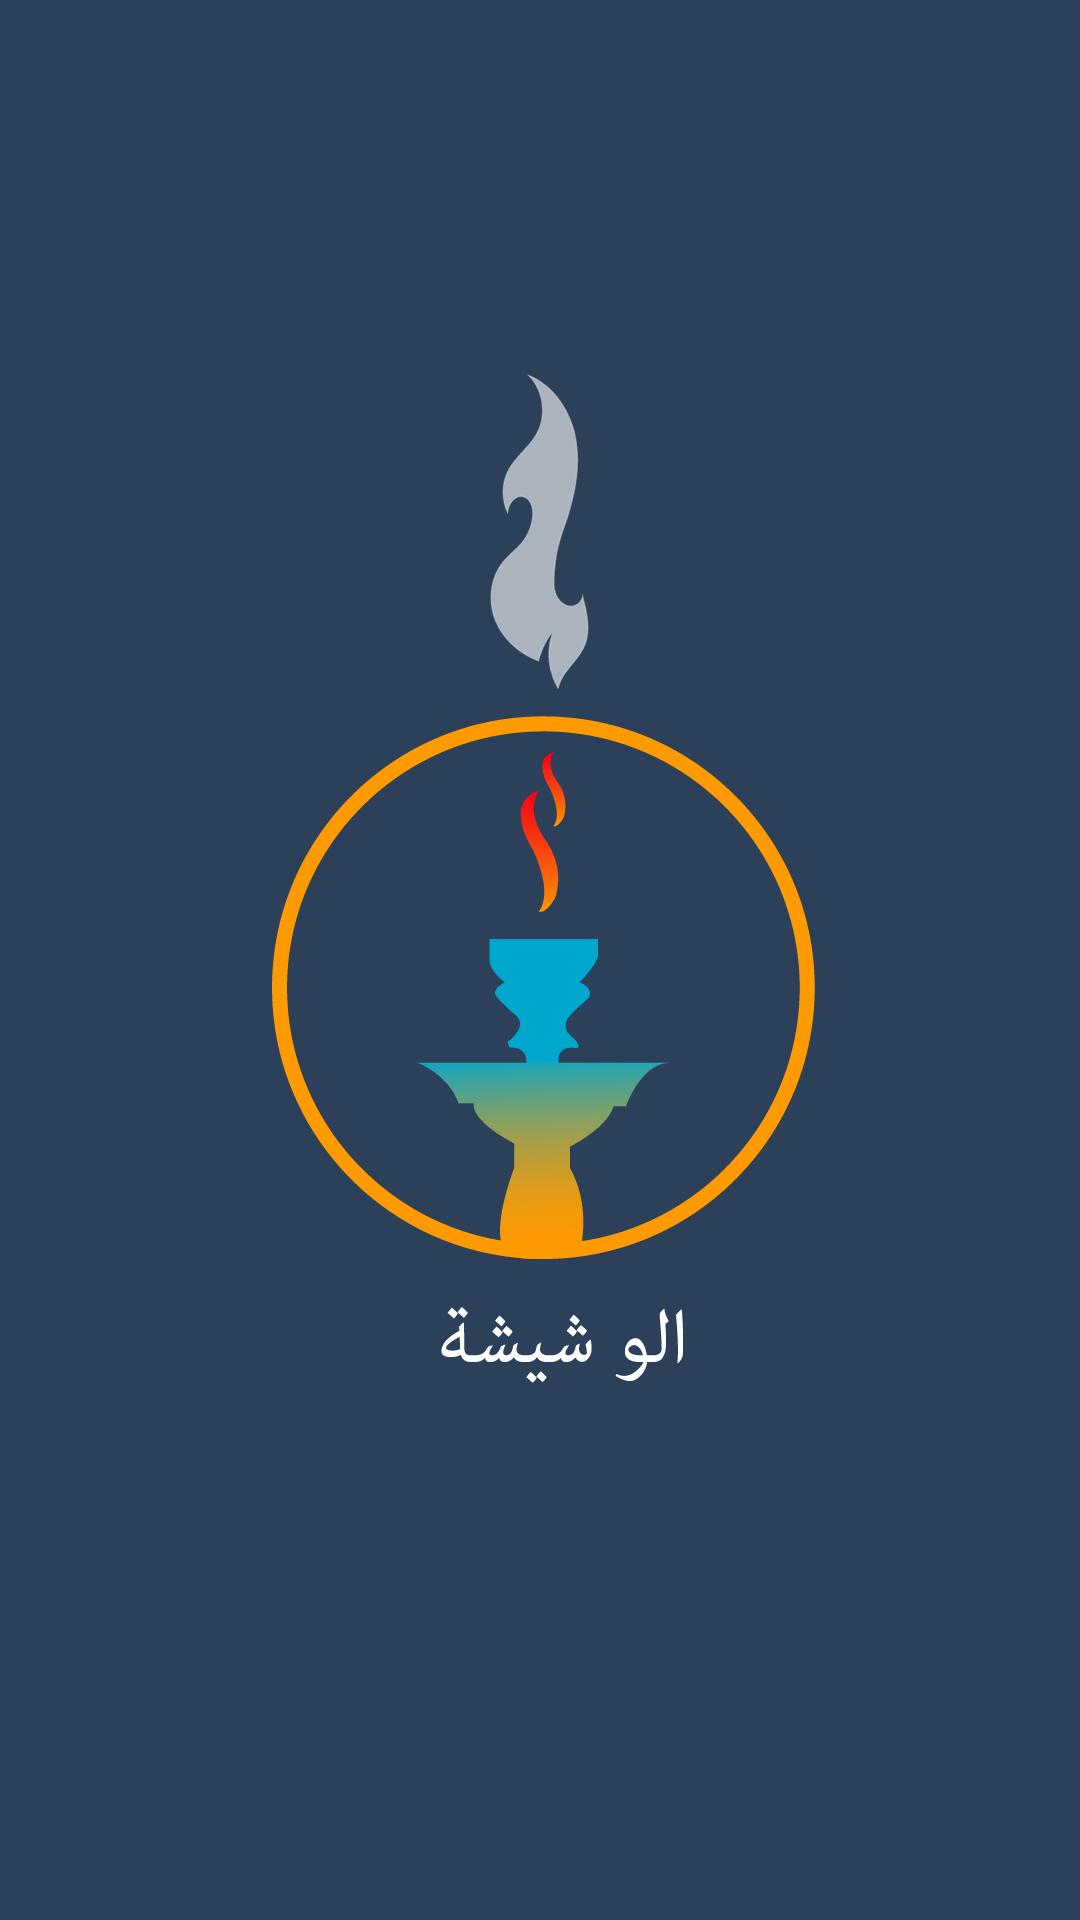 الو شيشه مندوب APK voor Android Download